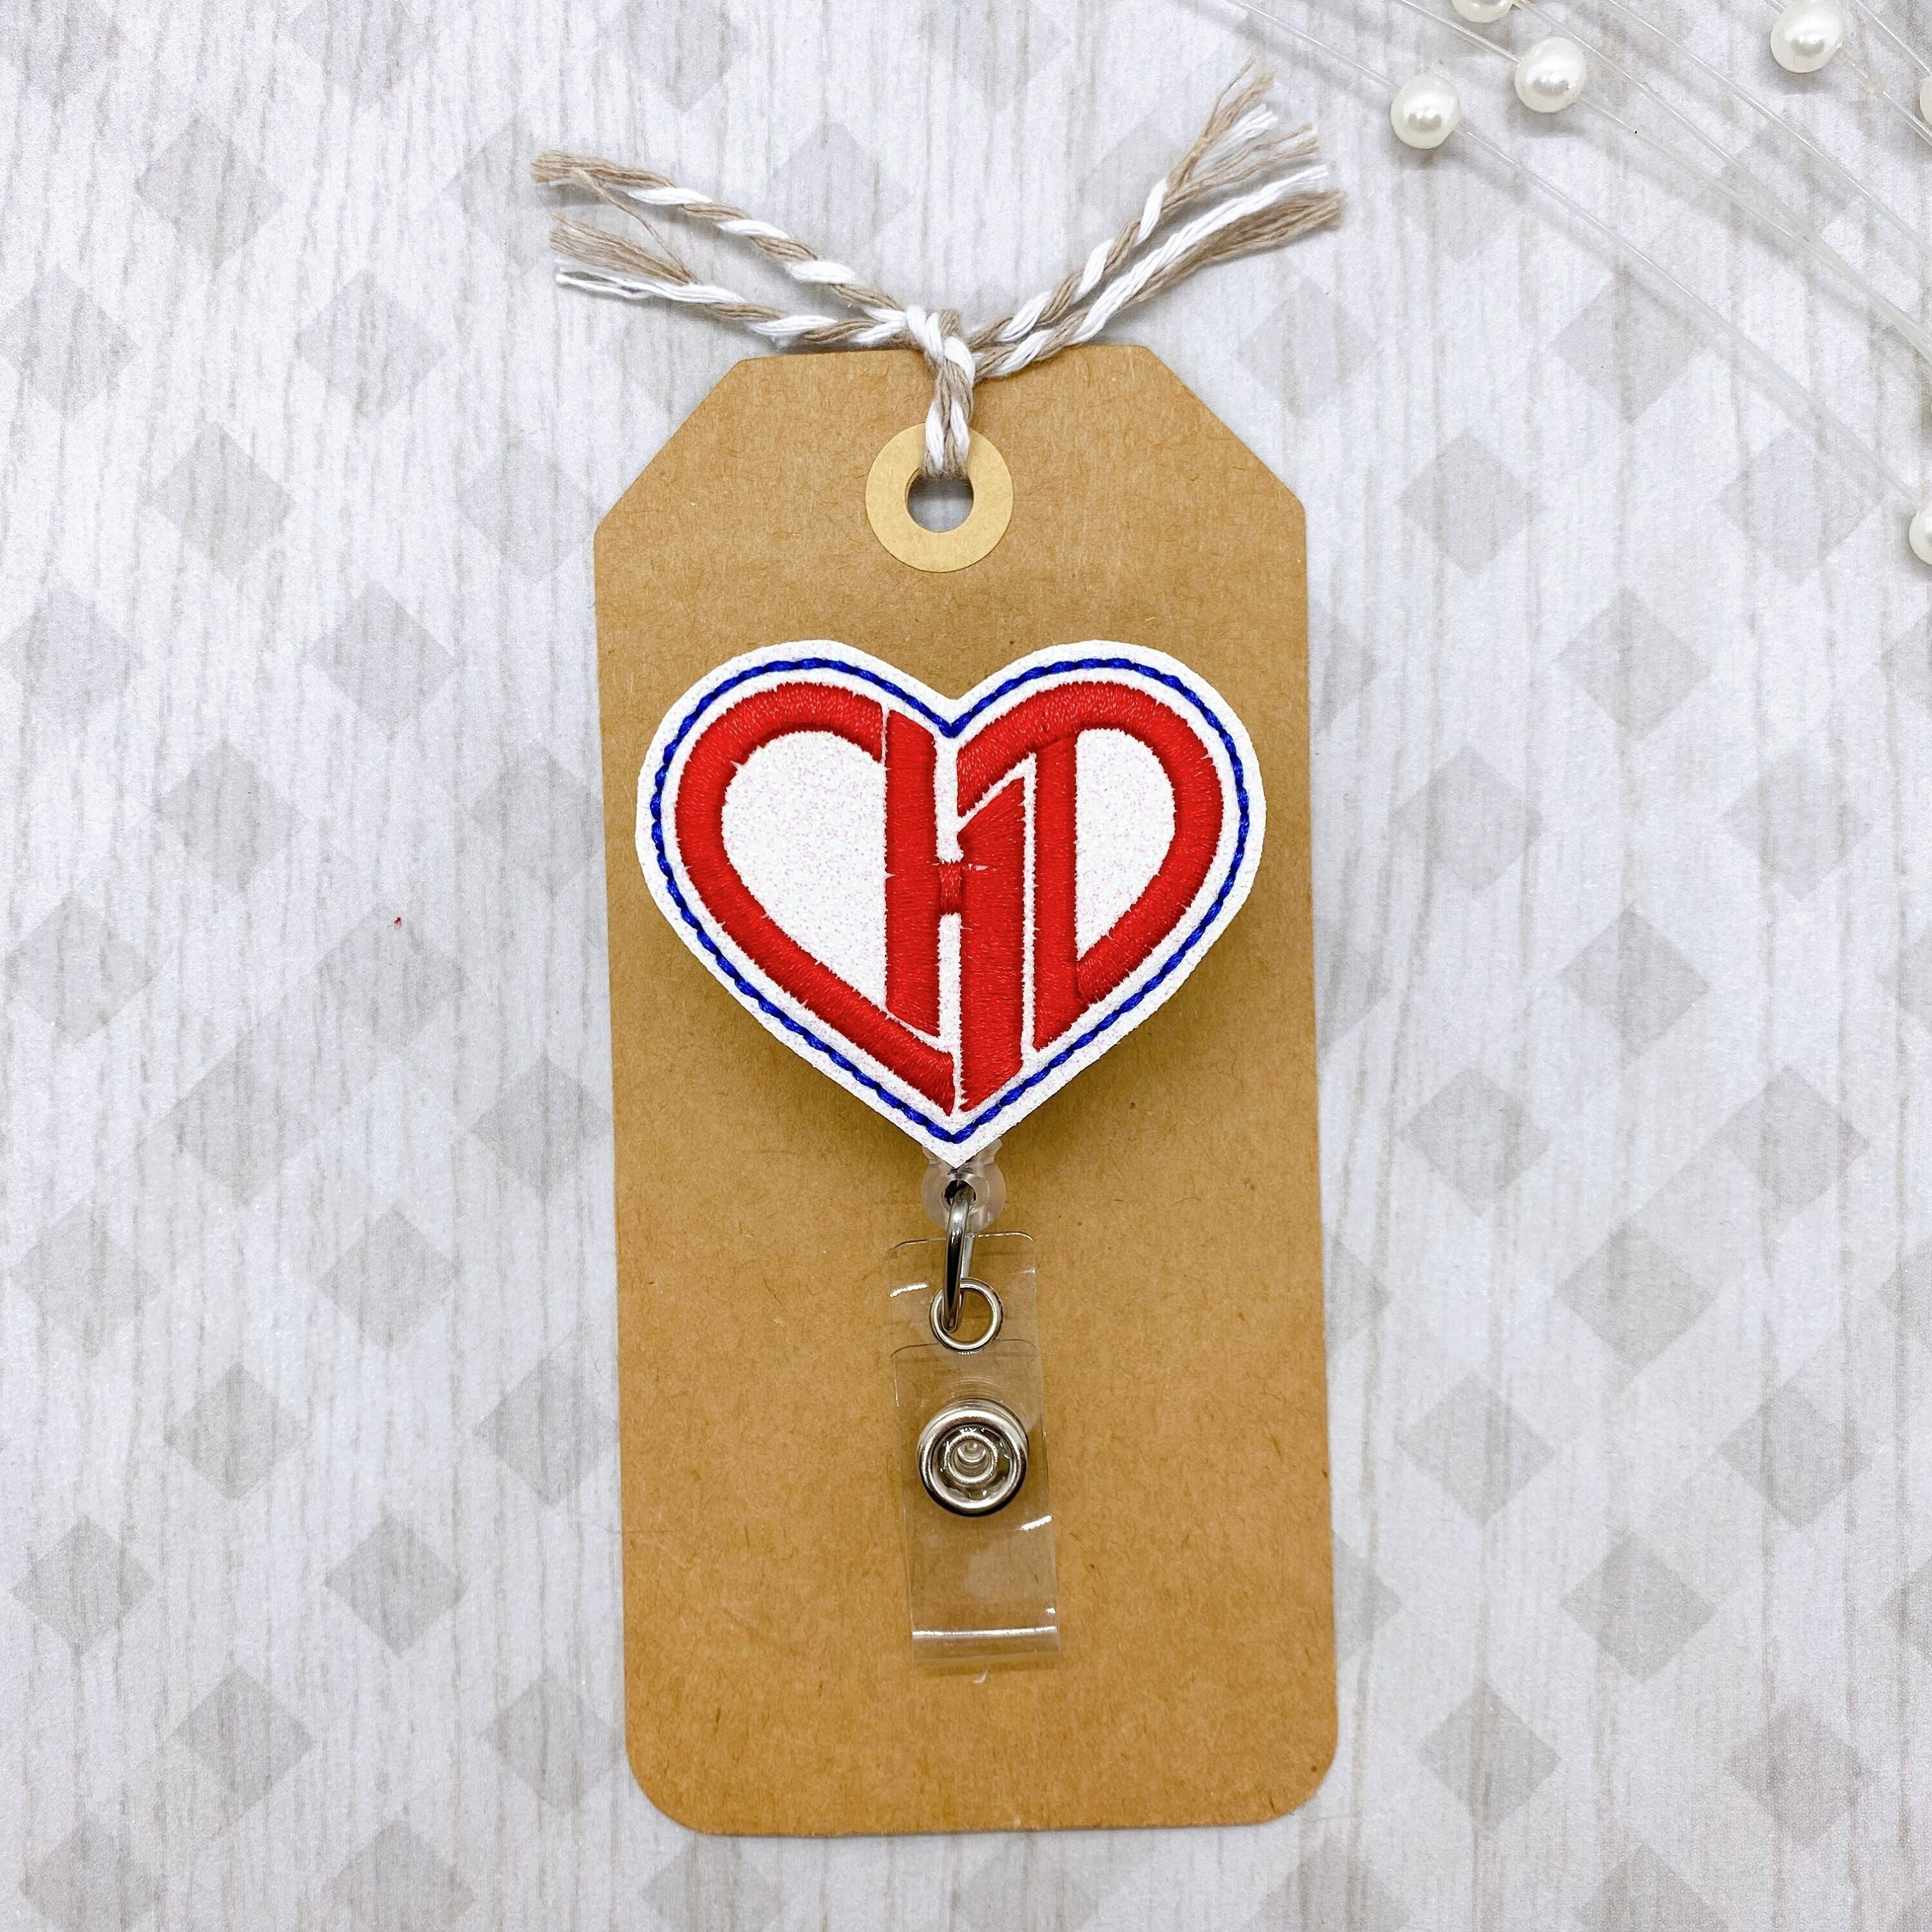 CHD Badge Reel, Congenital Heart Defect Badge Reel, CHD Awareness Badge  Clip, Nurse Badge Reel, Teacher Lanyard, Retractable ID Badge Holder -   Denmark